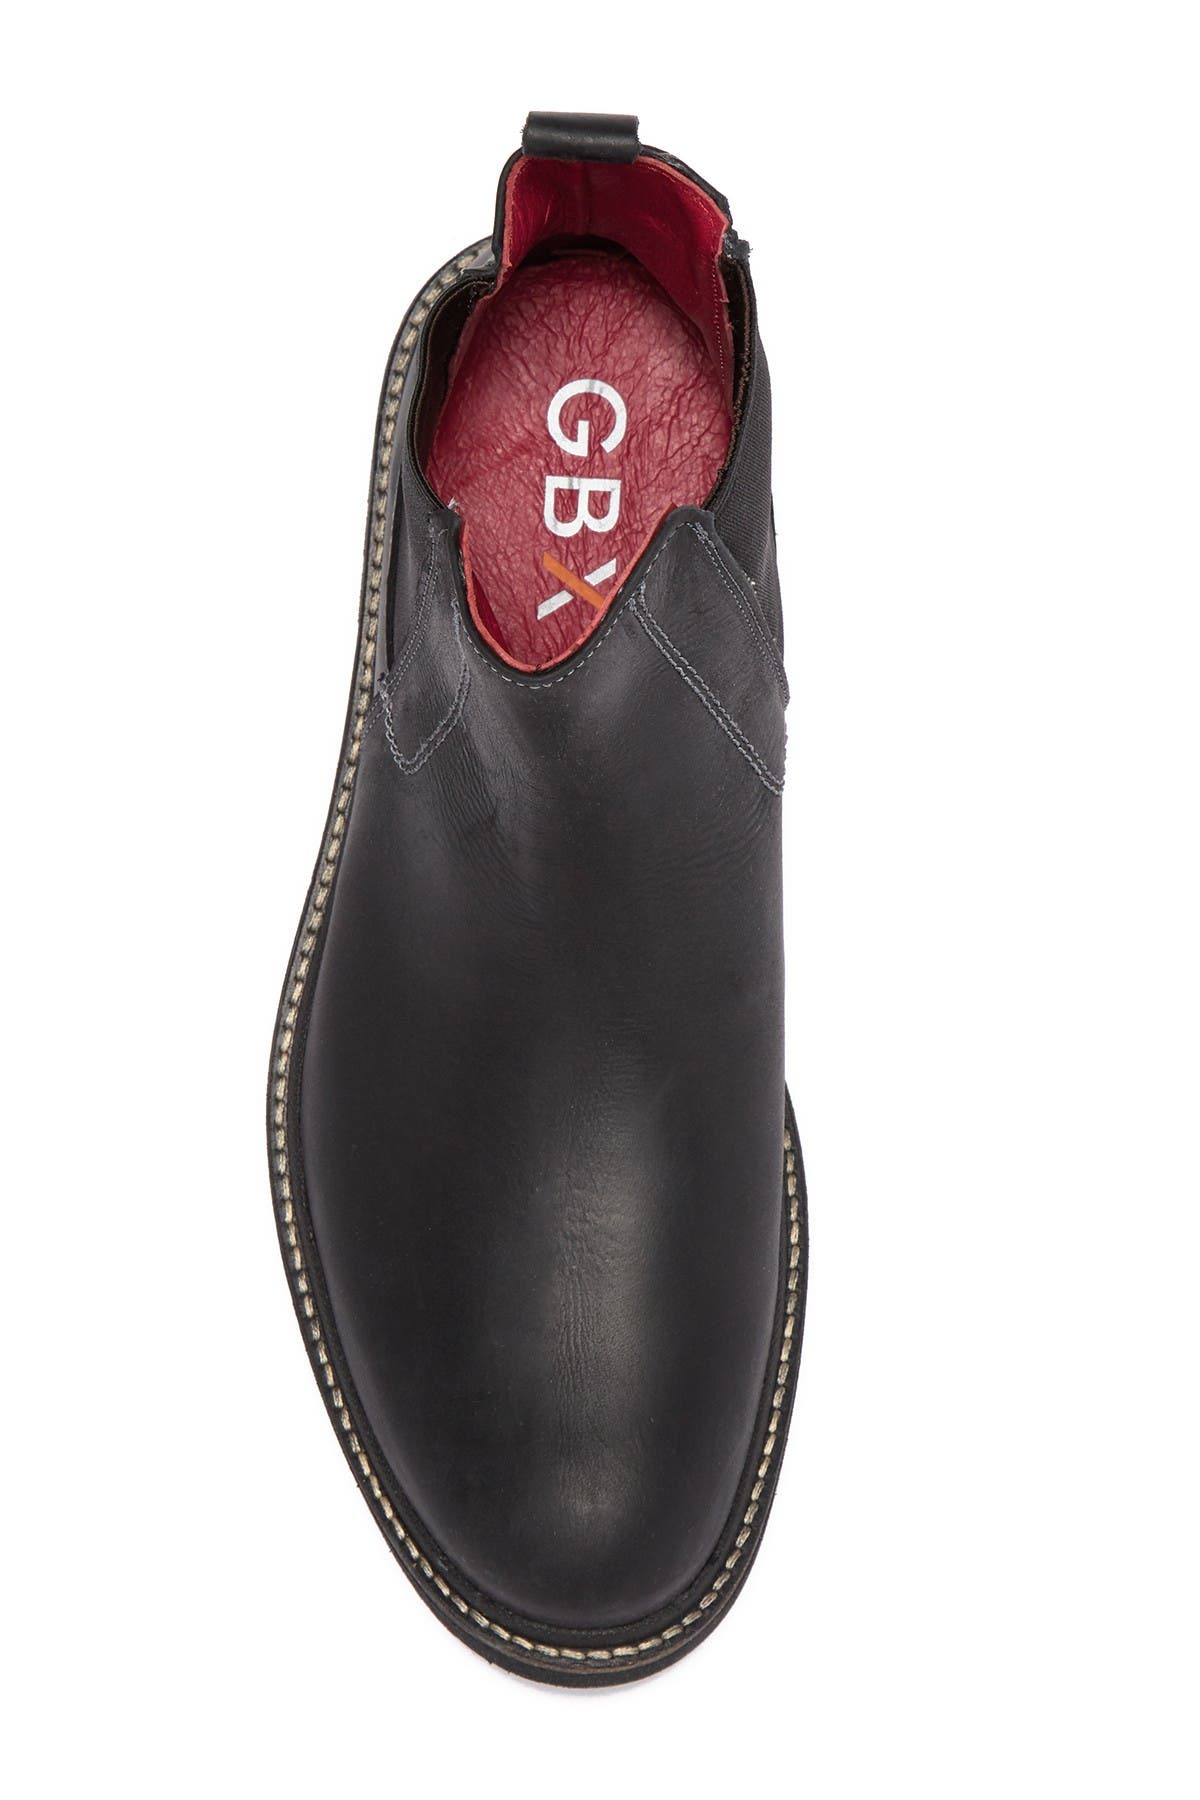 gbx chelsea boot